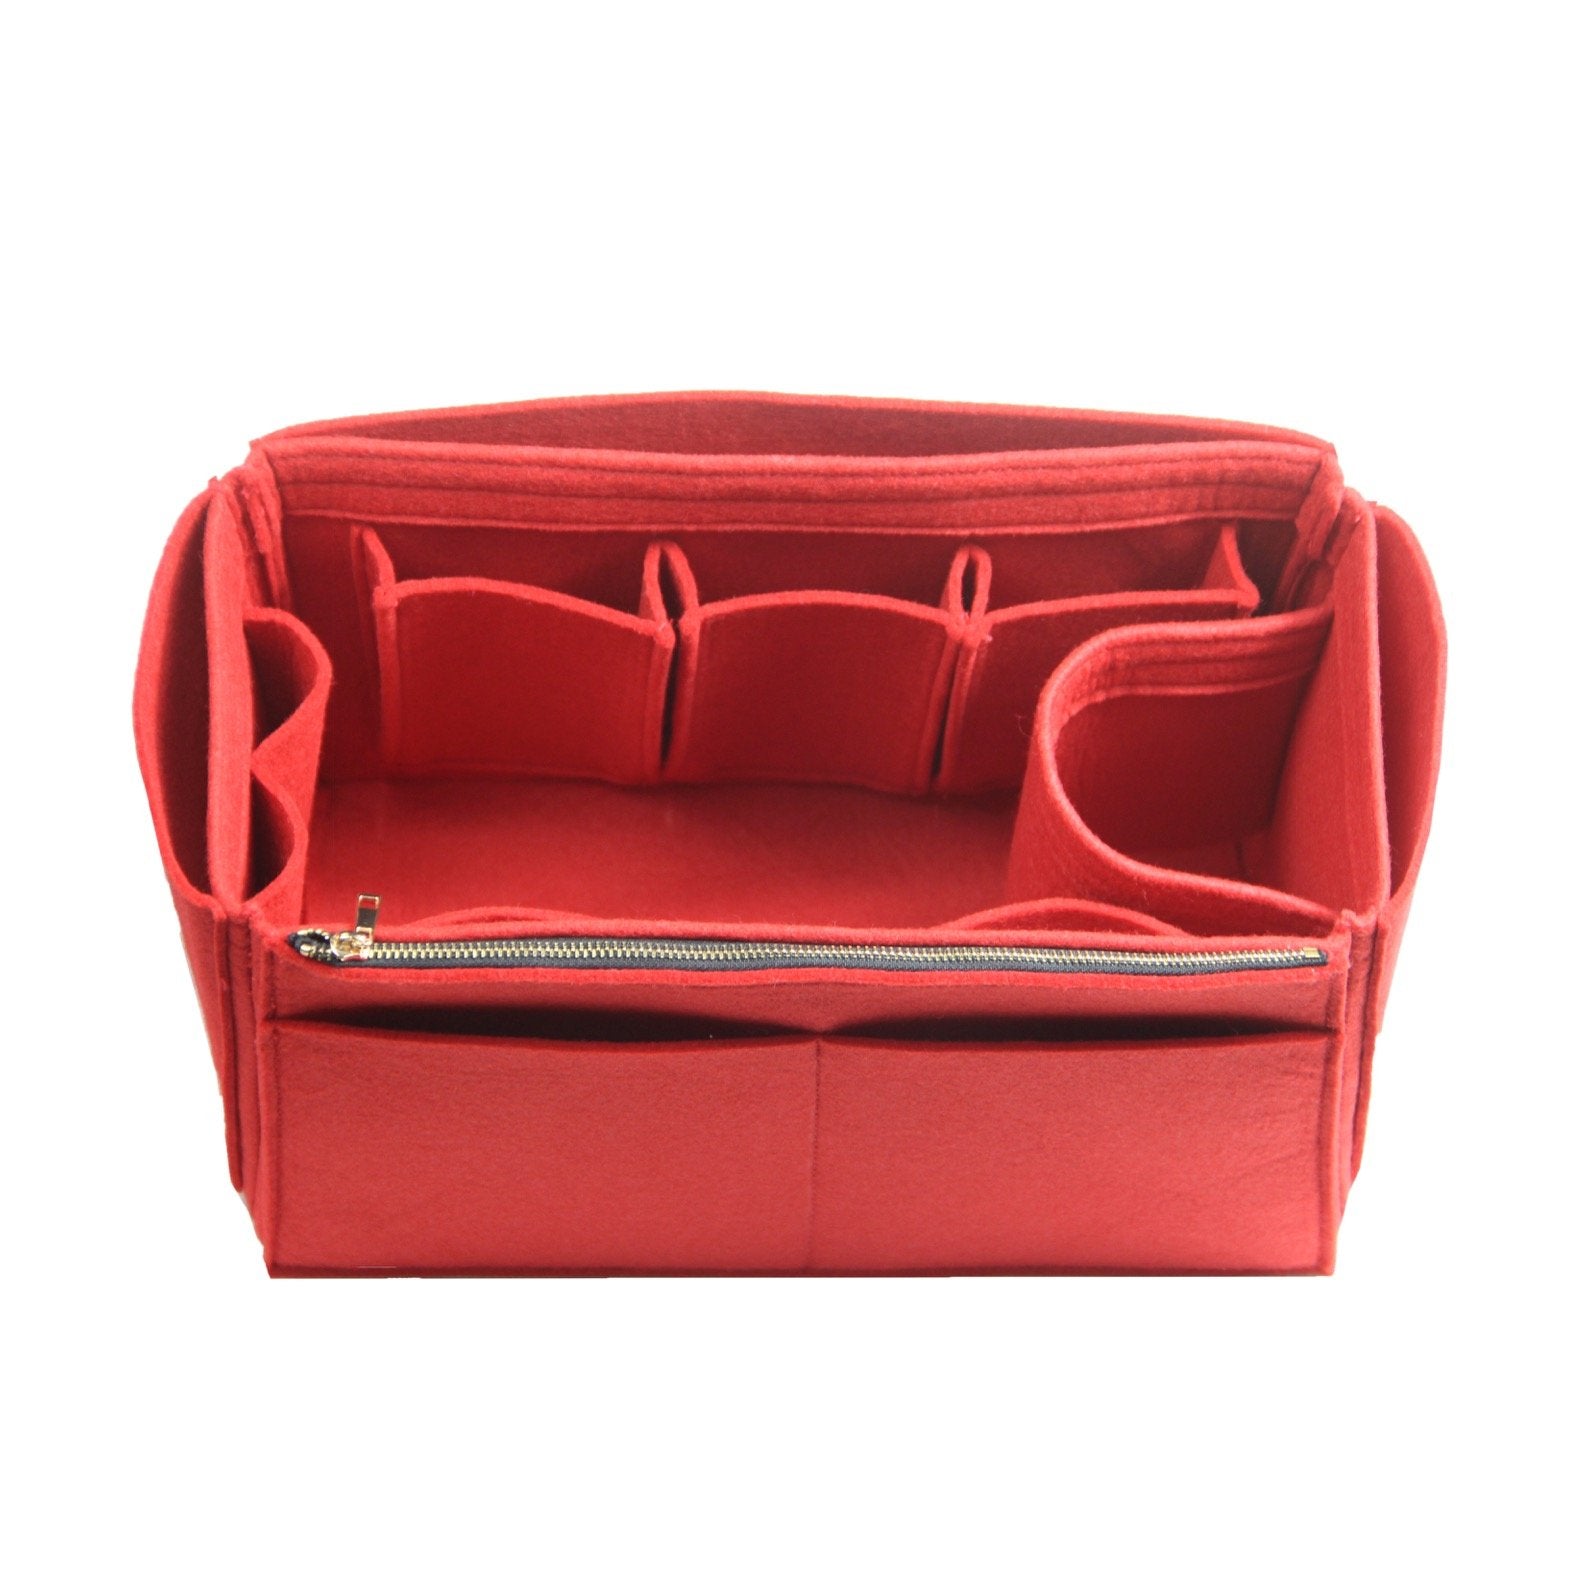 Red Purse Organizer - Fits Alma PM  Red purses, Purses, Louis vuitton purse